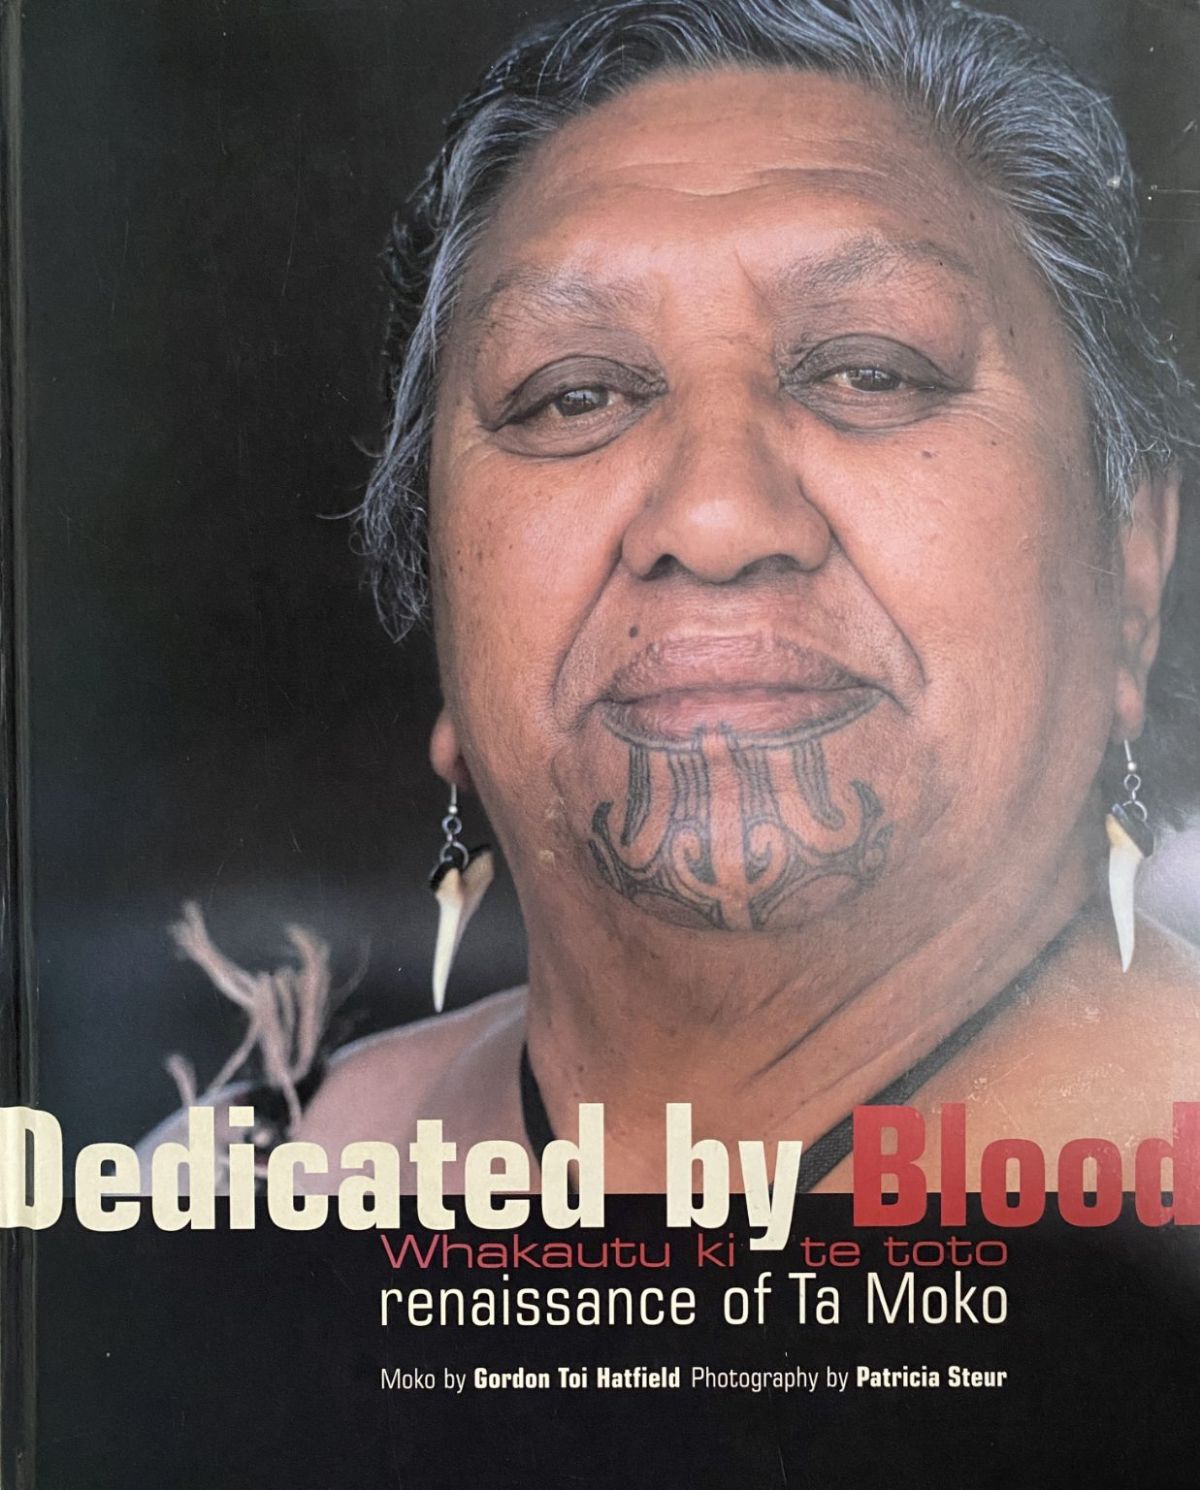 DEDICATED BY BLOOD: Renaissance of Ta Moko